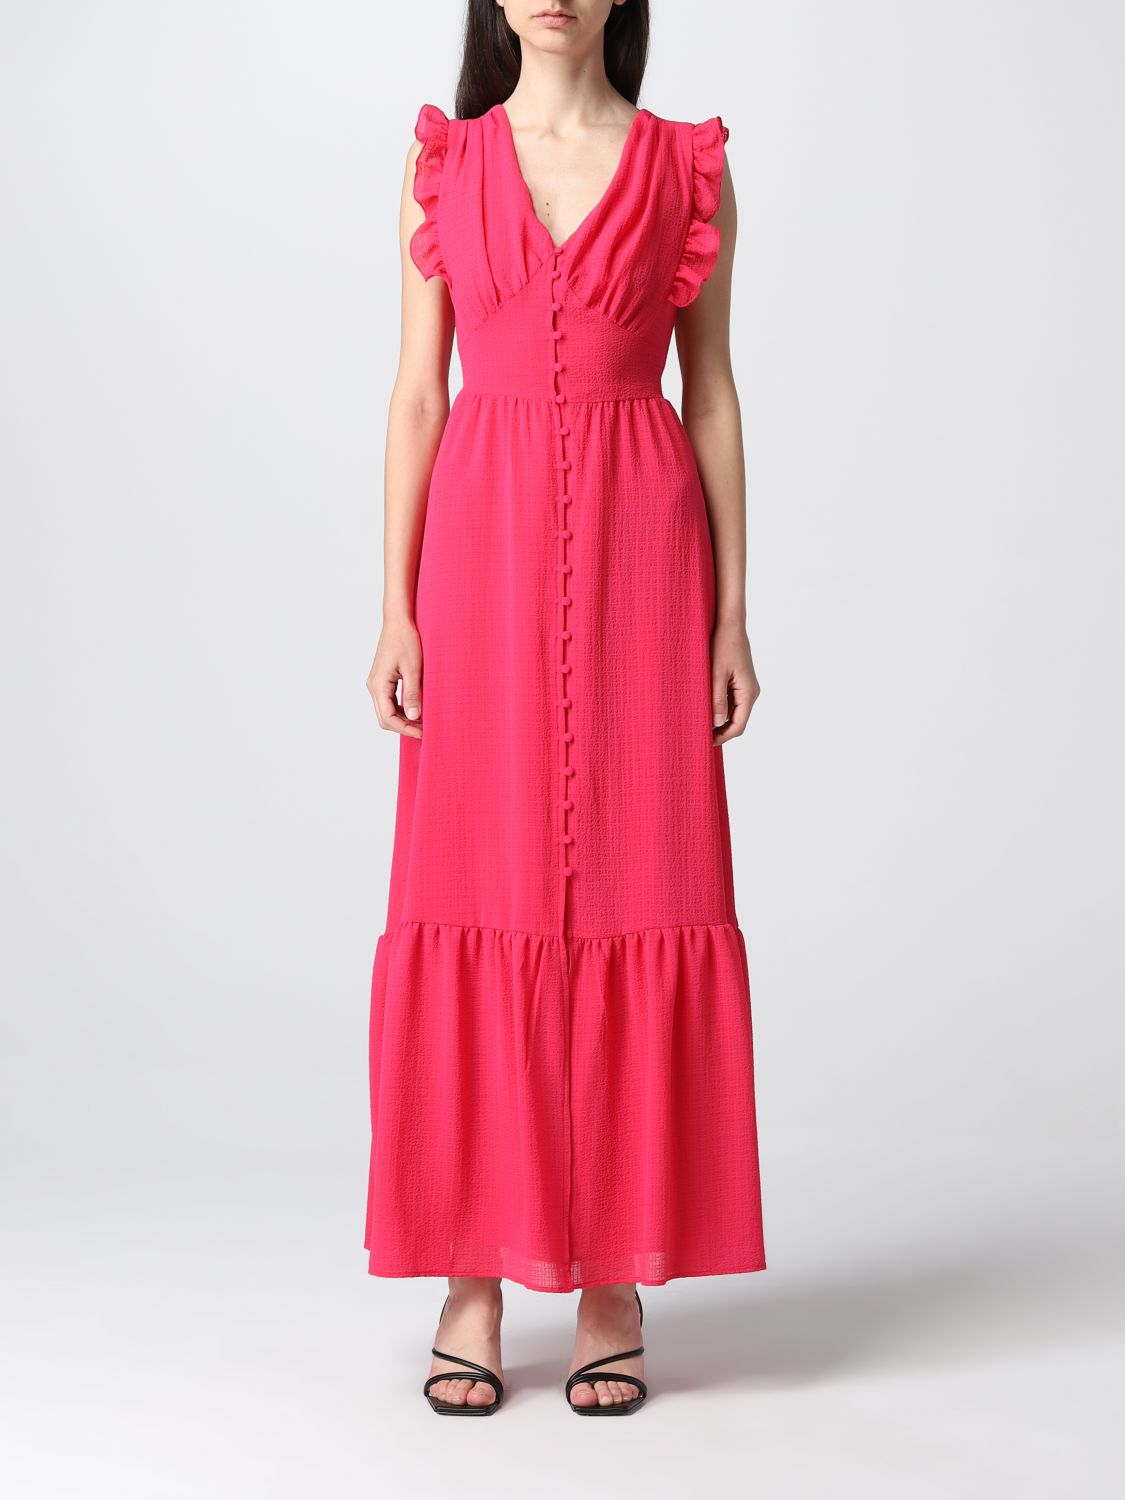 LIU JO: for woman - Fuchsia | Liu Jo dress WA2194T3052 online on GIGLIO.COM